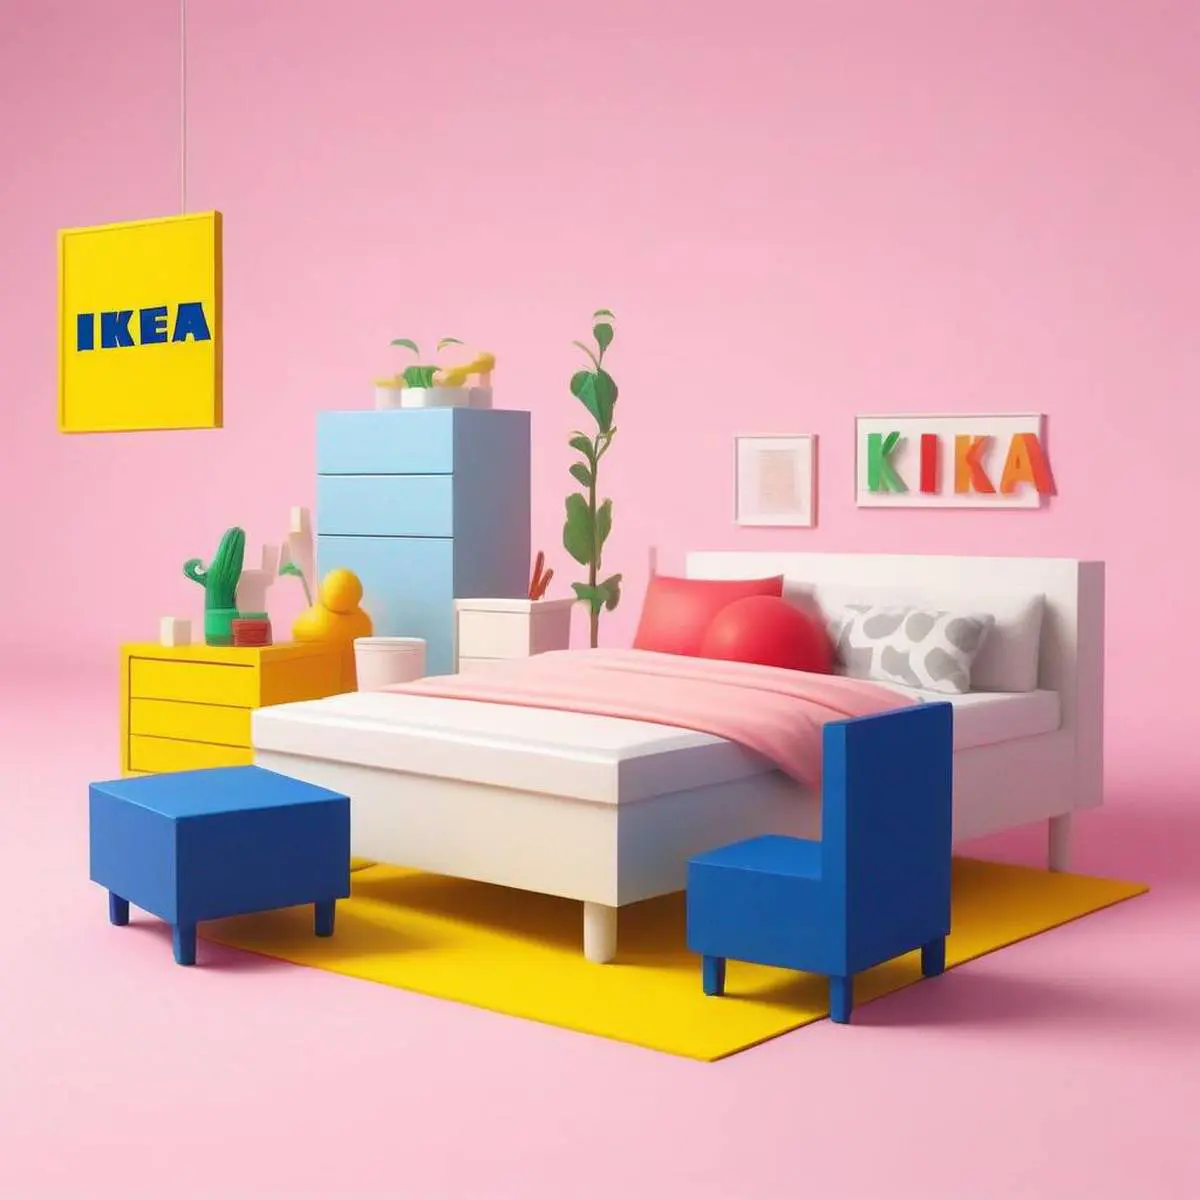 Ikea puns